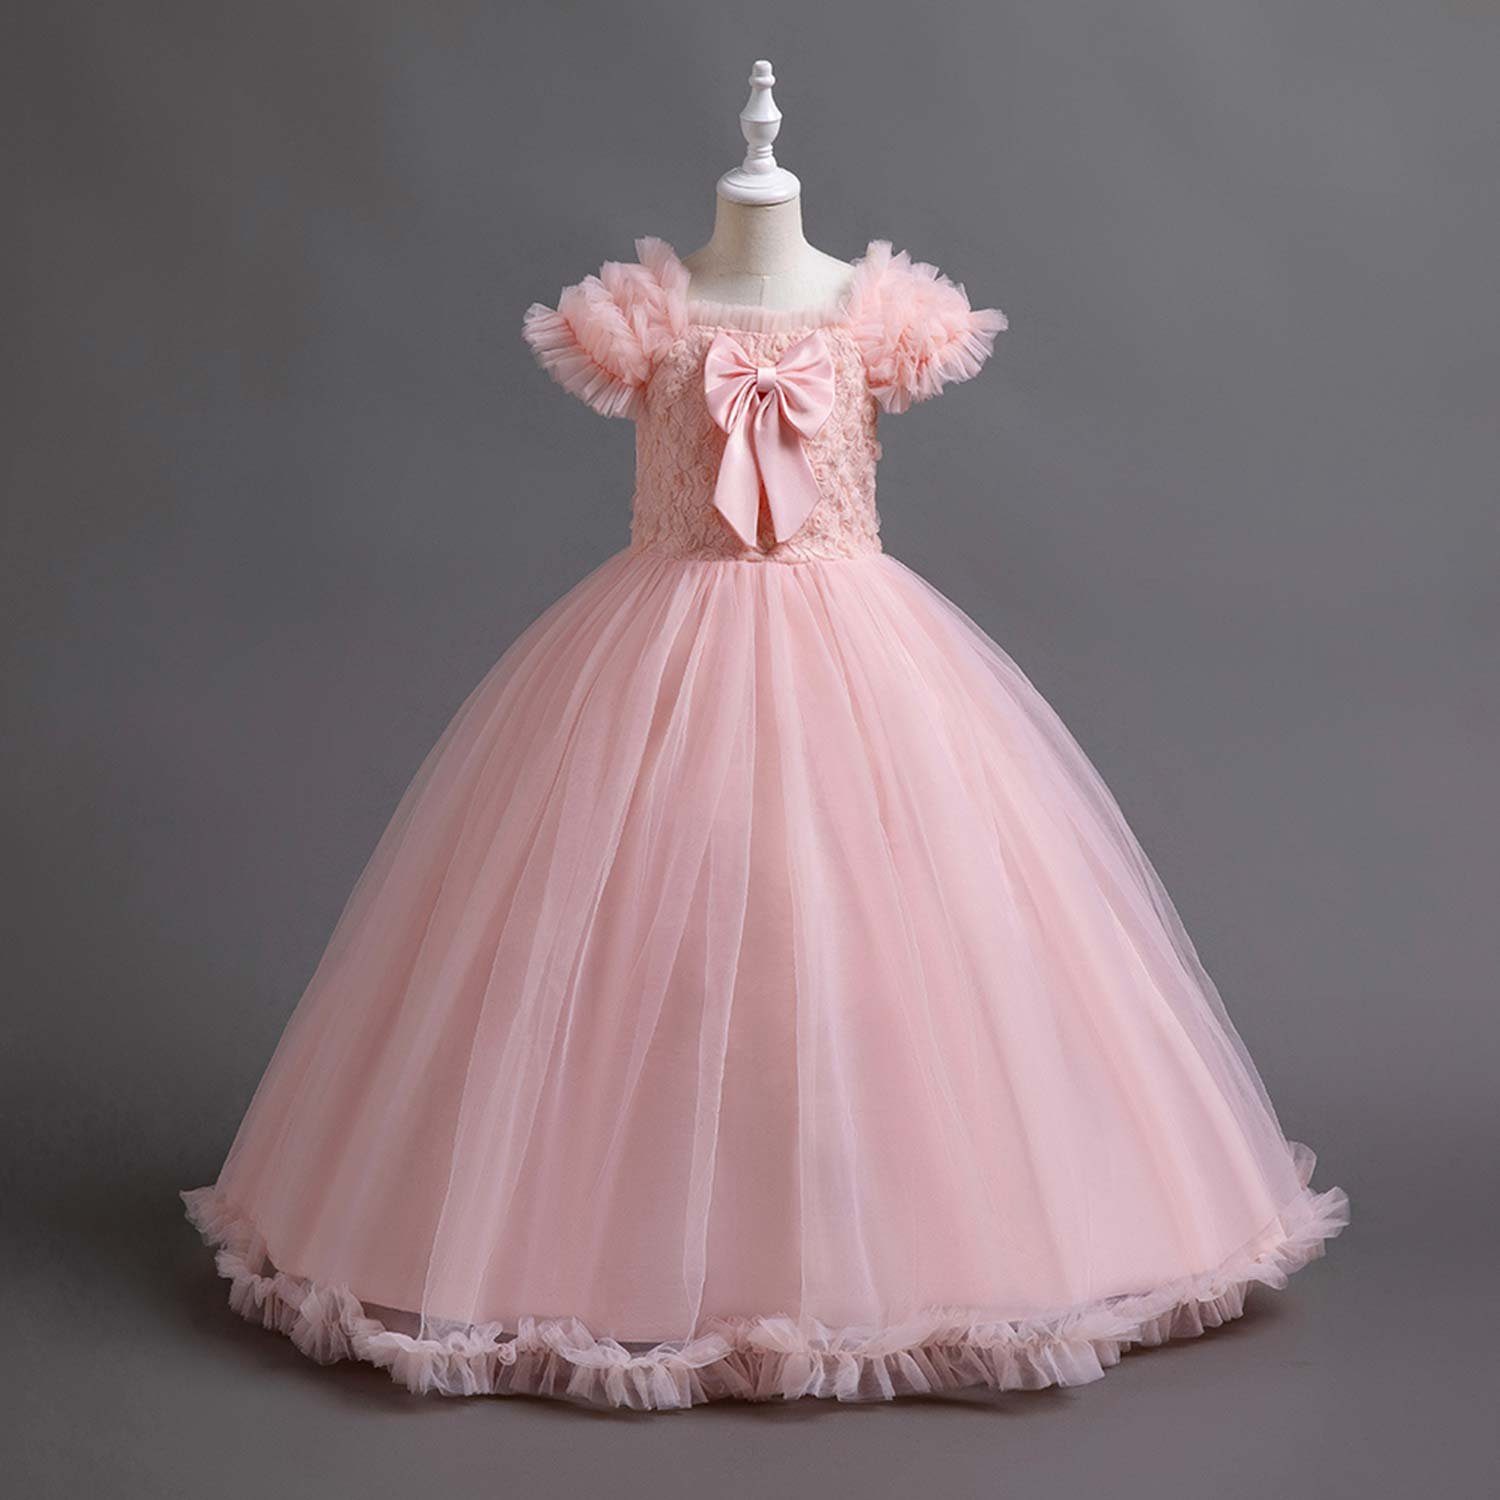 Daisred Tüllkleid Kinderkleider Ballkleid Rosa Prinzessinnenkleider Abendkleider